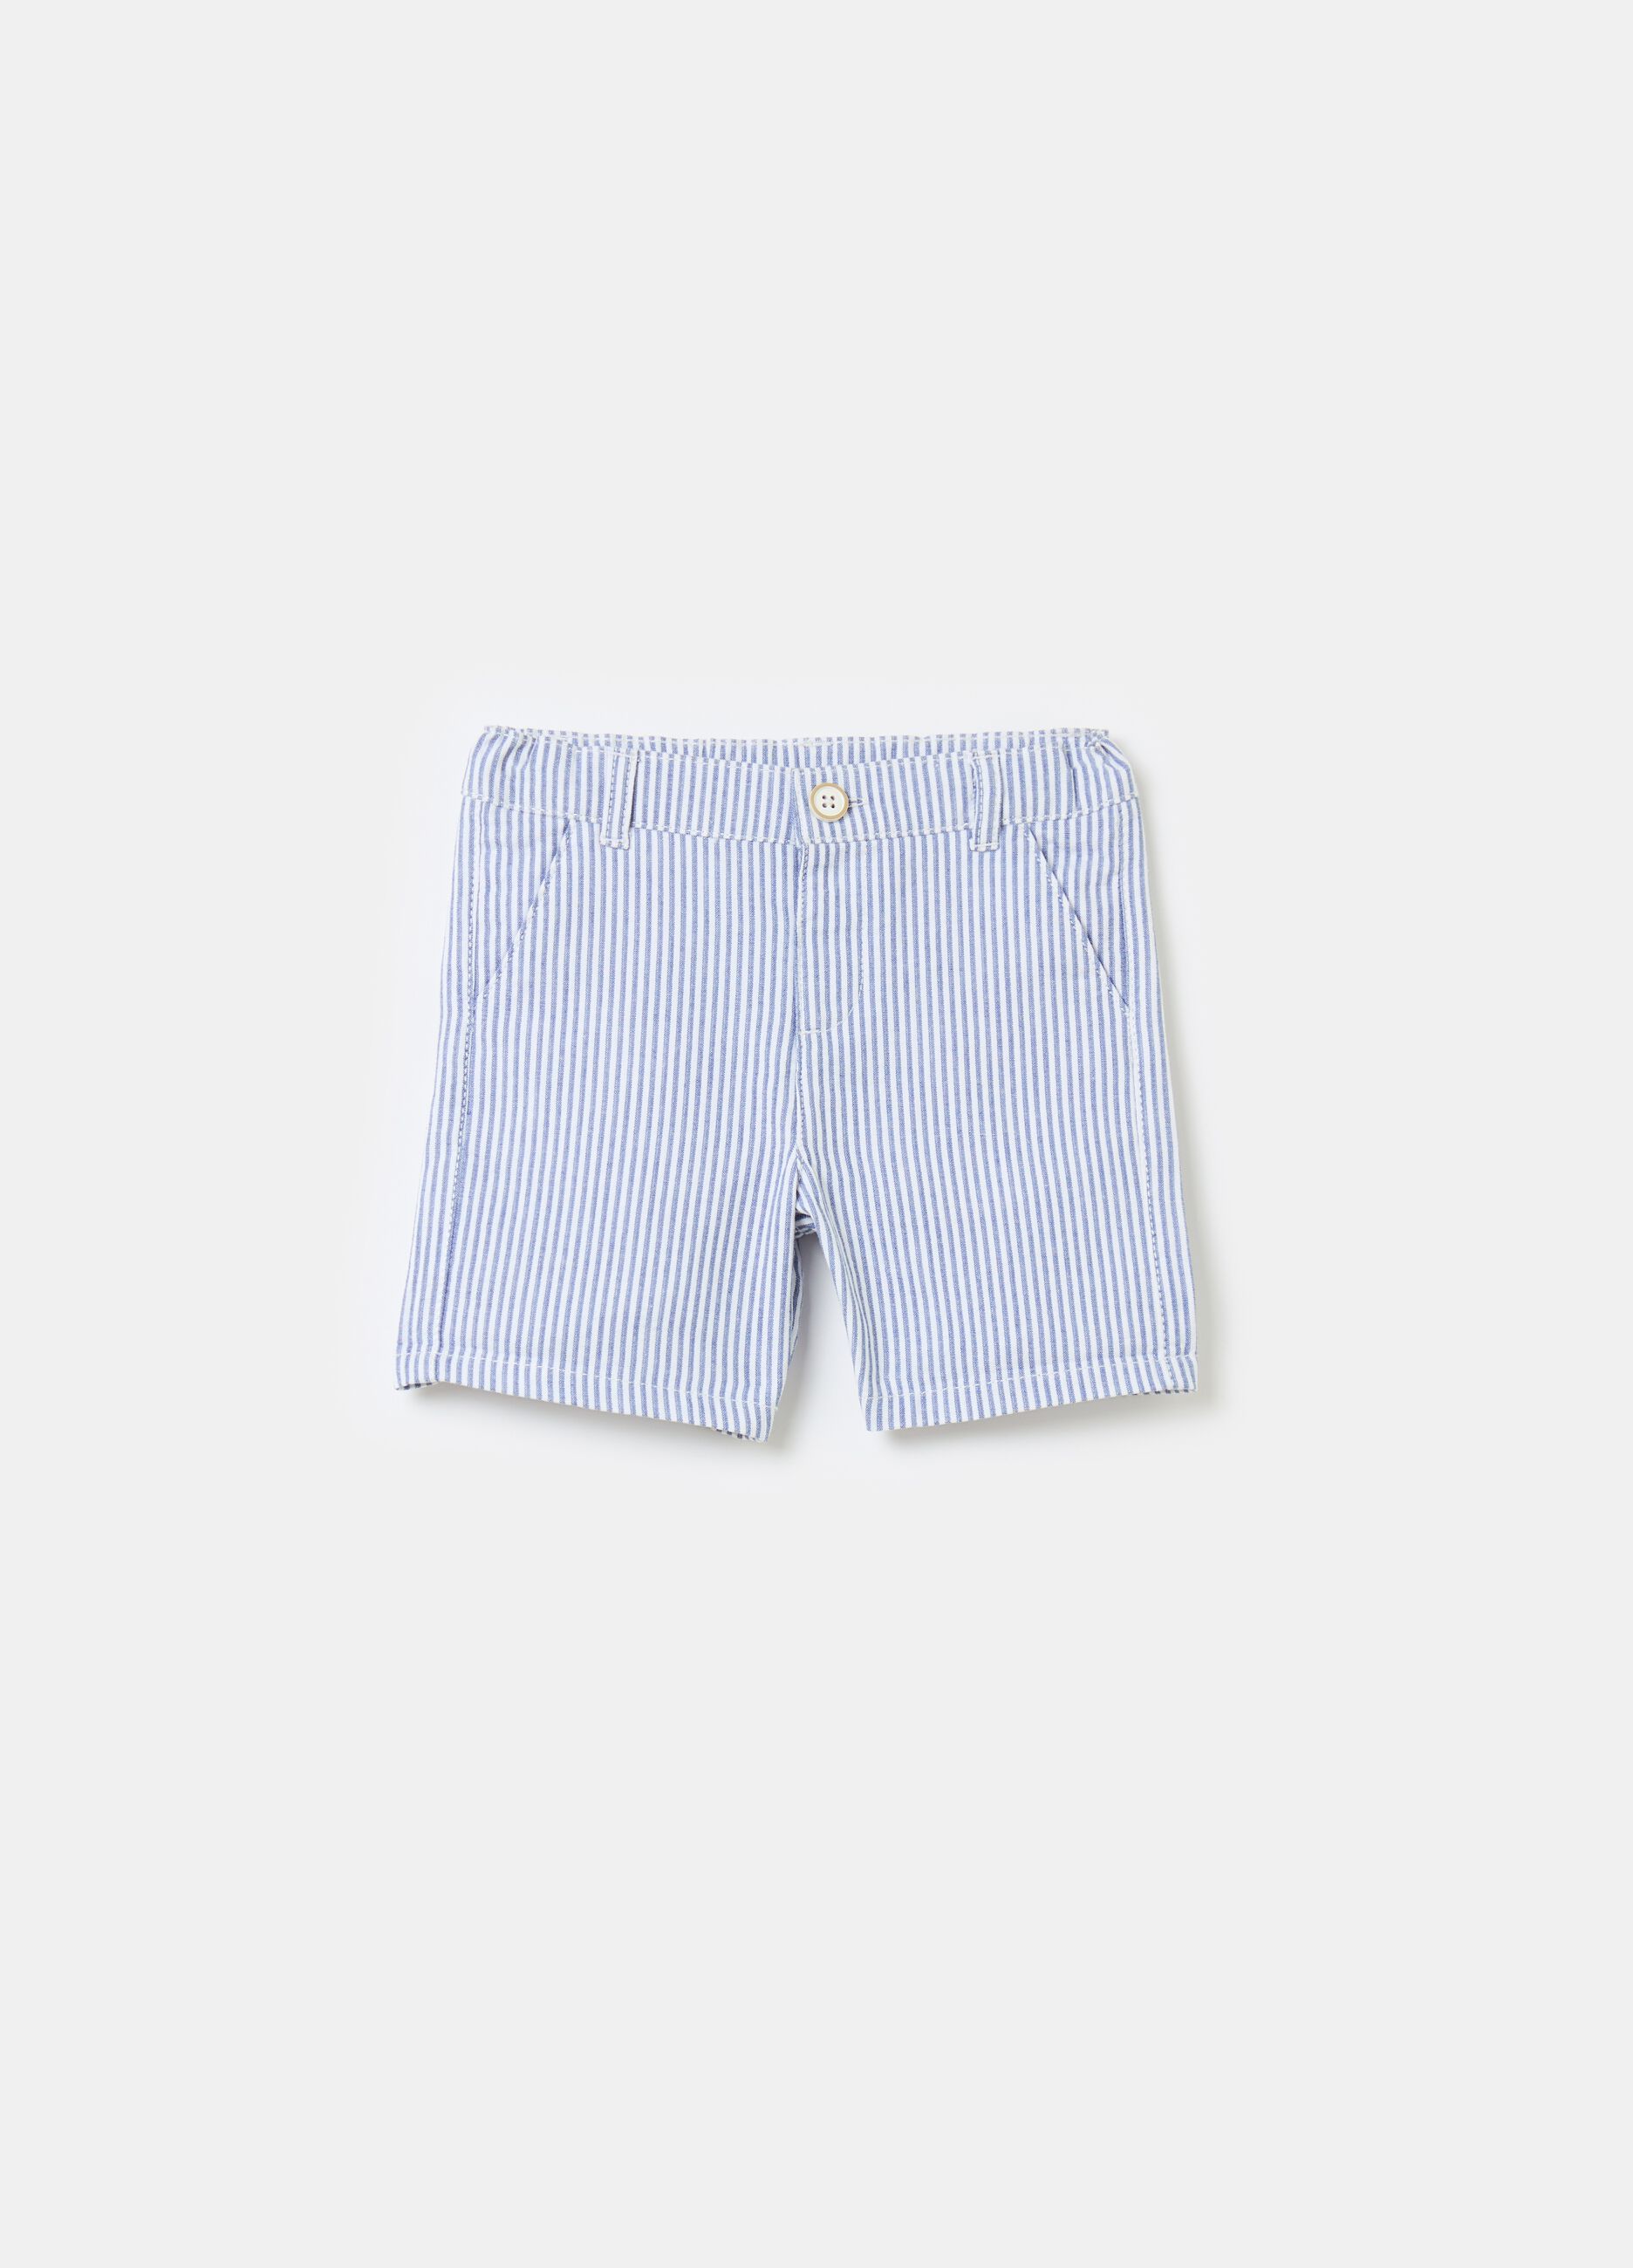 Striped Bermuda shorts in cotton